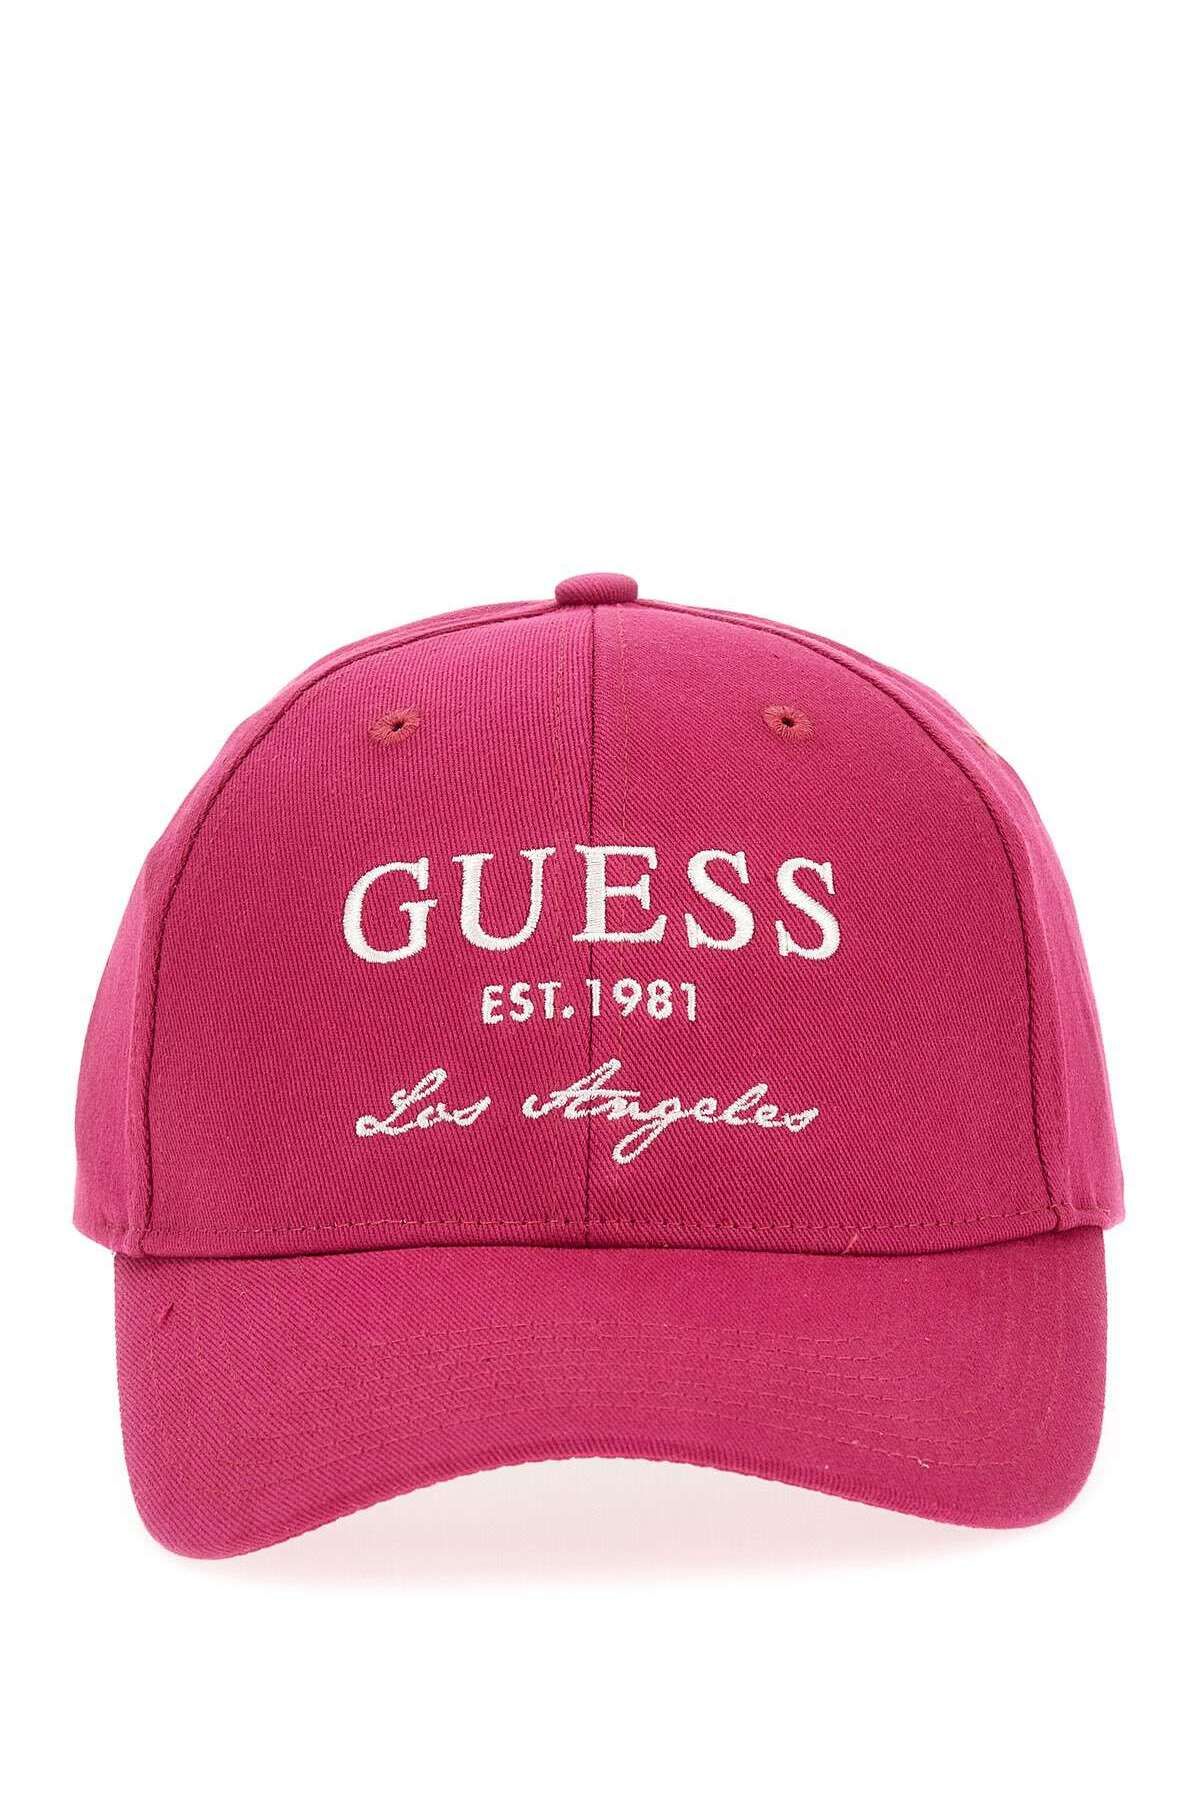 Guess Kadın Aktif Şapka